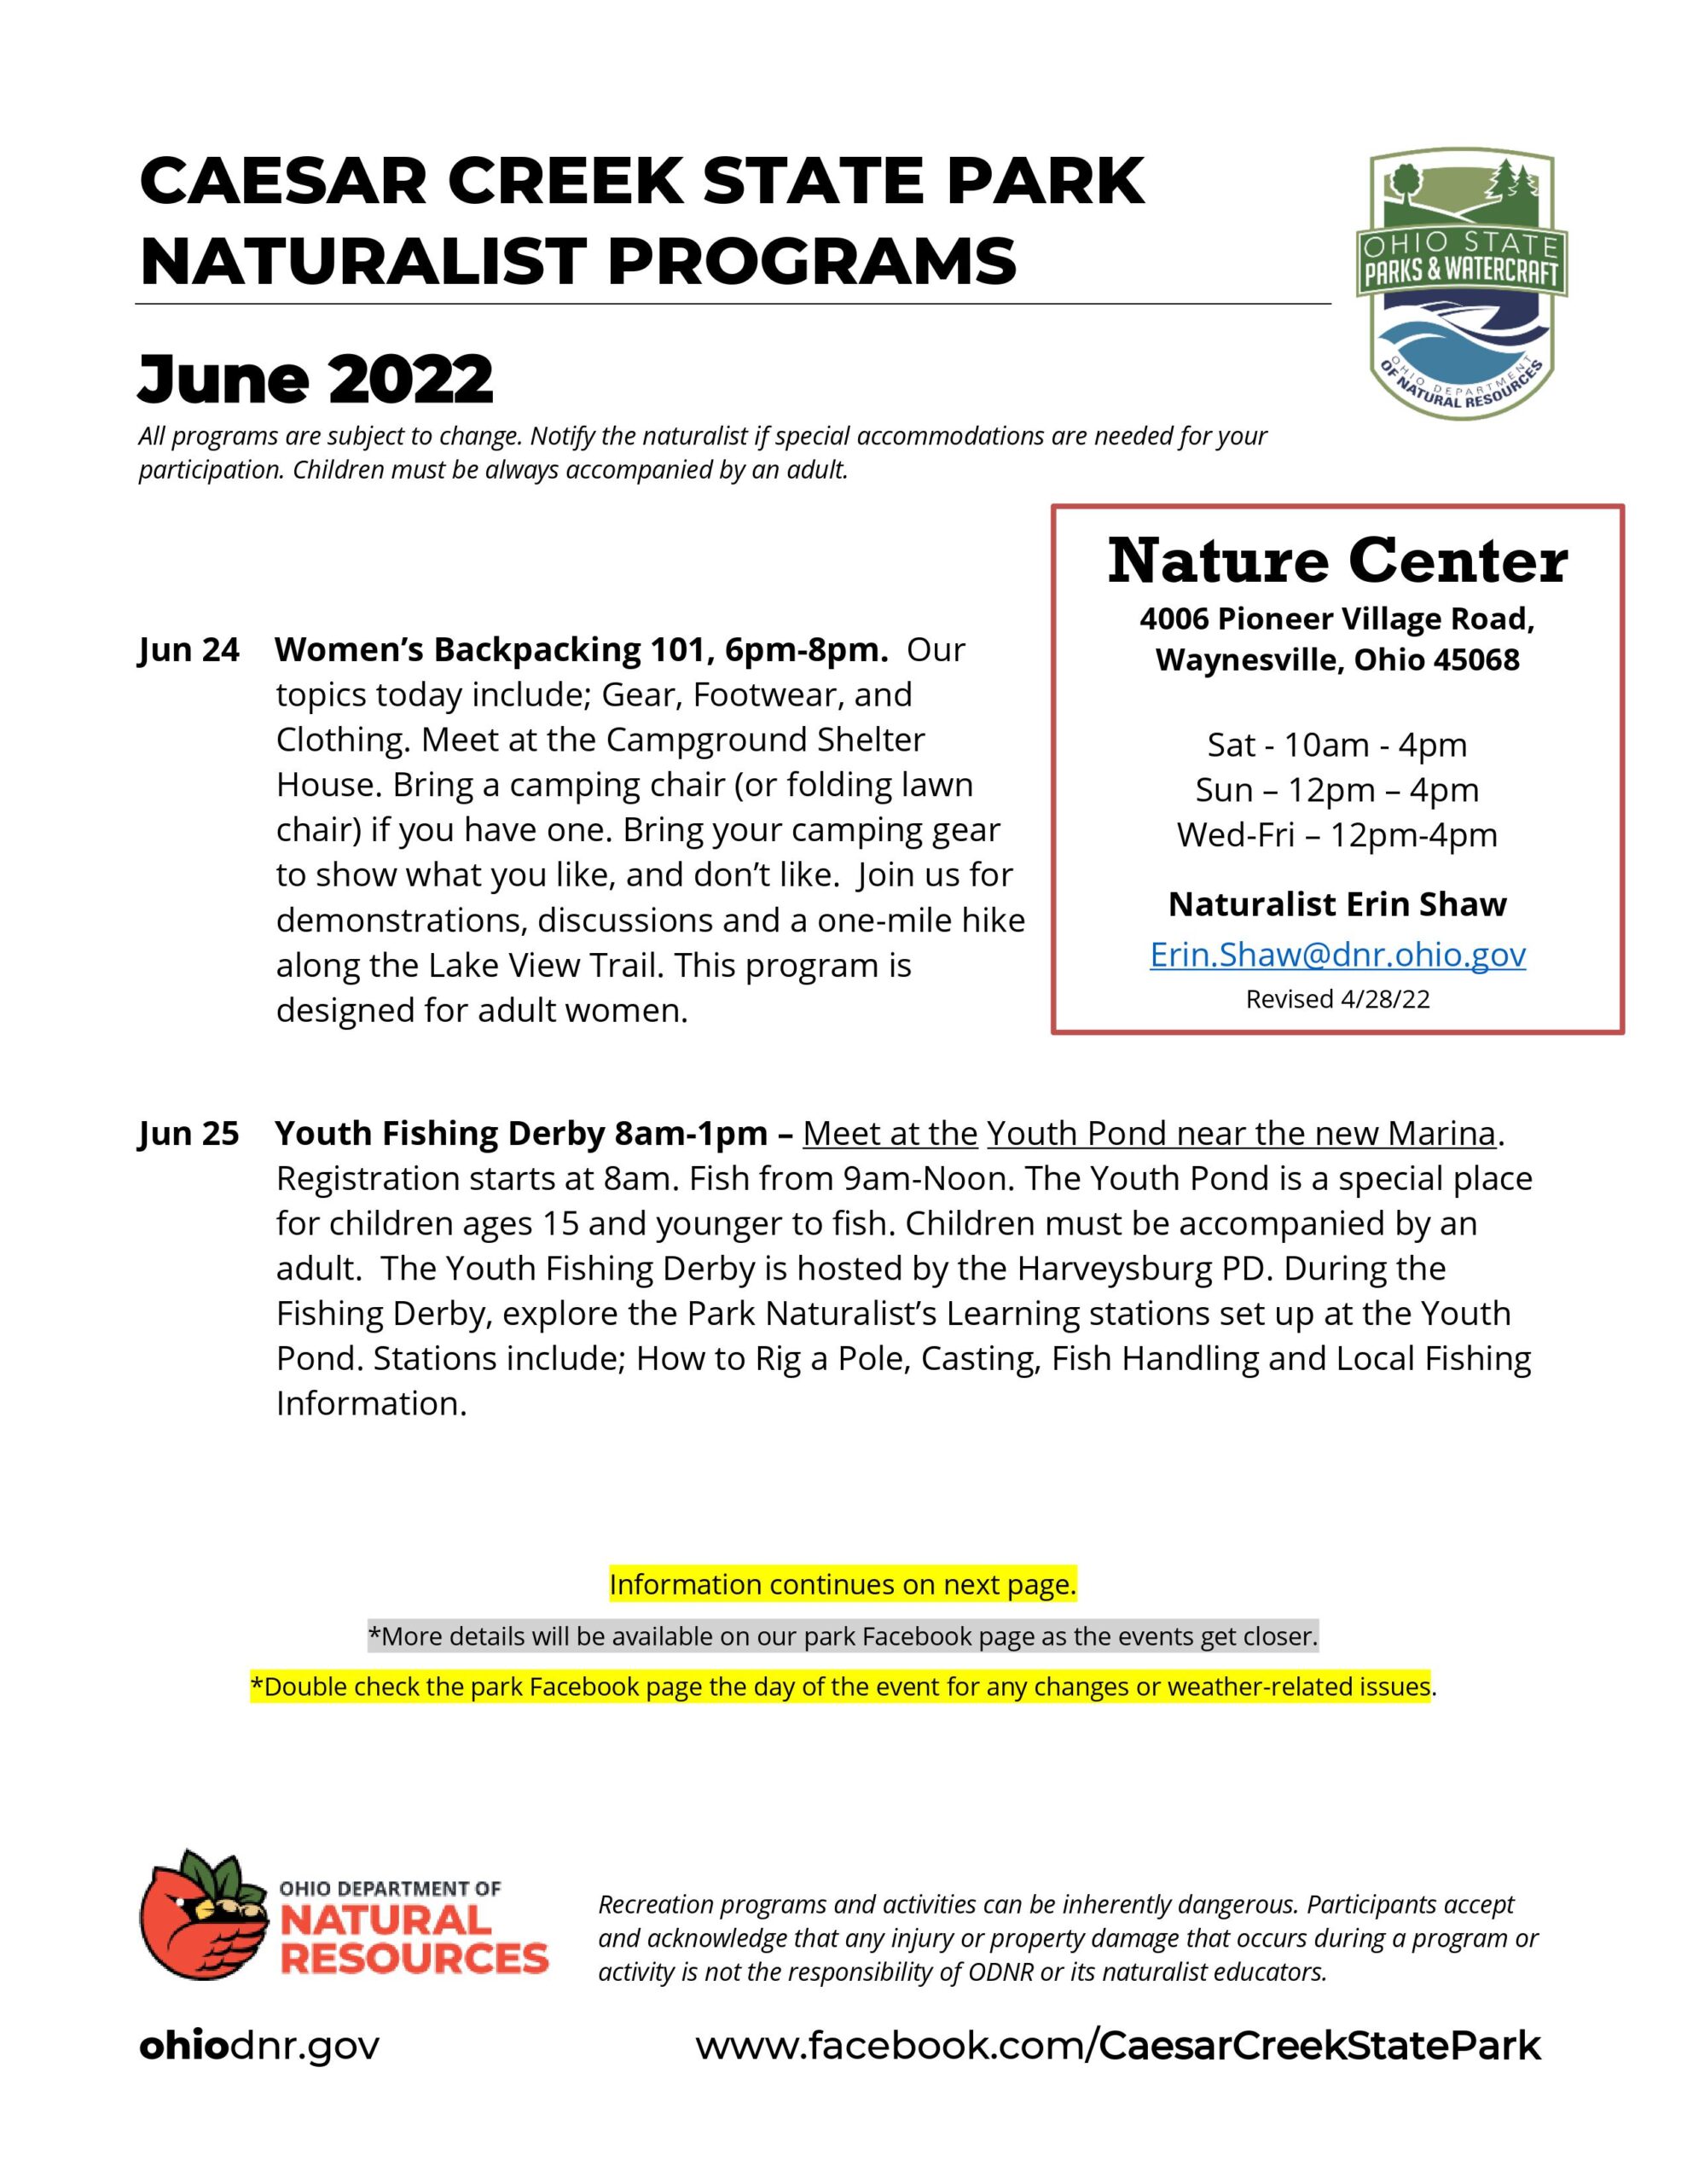 June 2022 Programs7